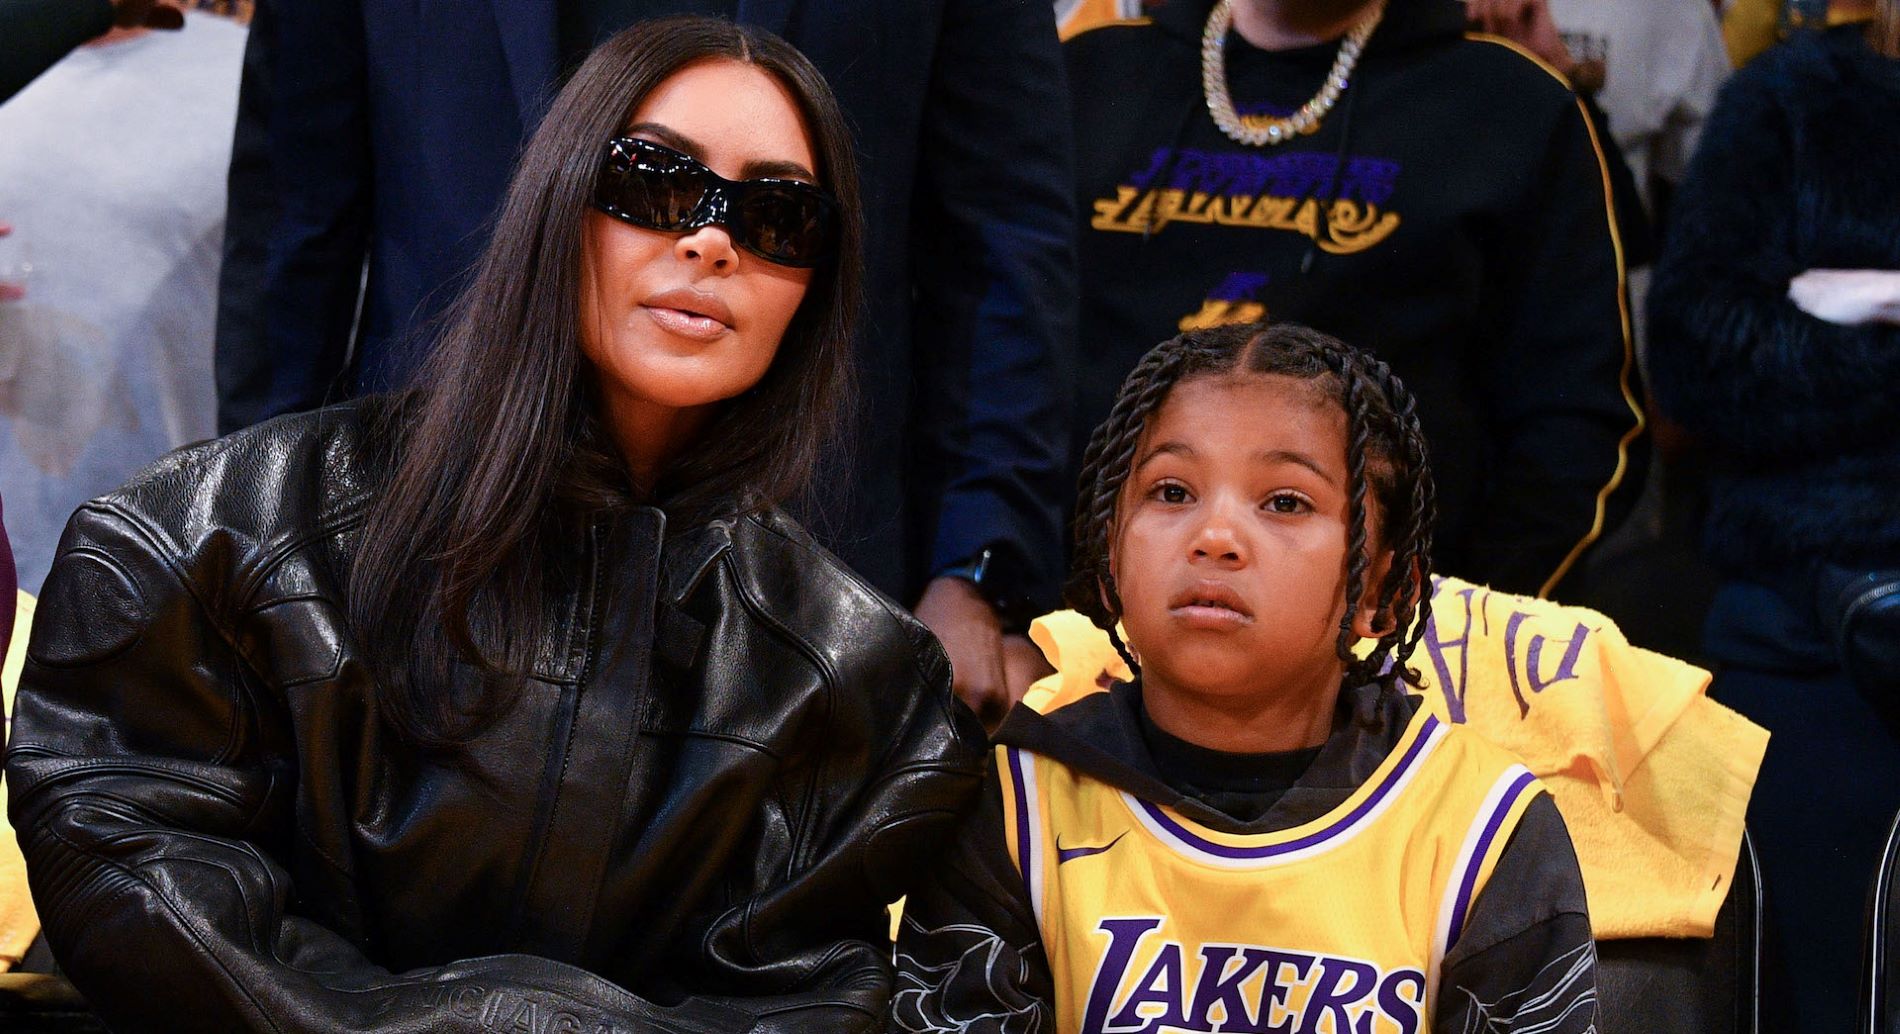 Kim Kardashian’s Son, Saint, Shows Displeasure Towards Paparazzi Again